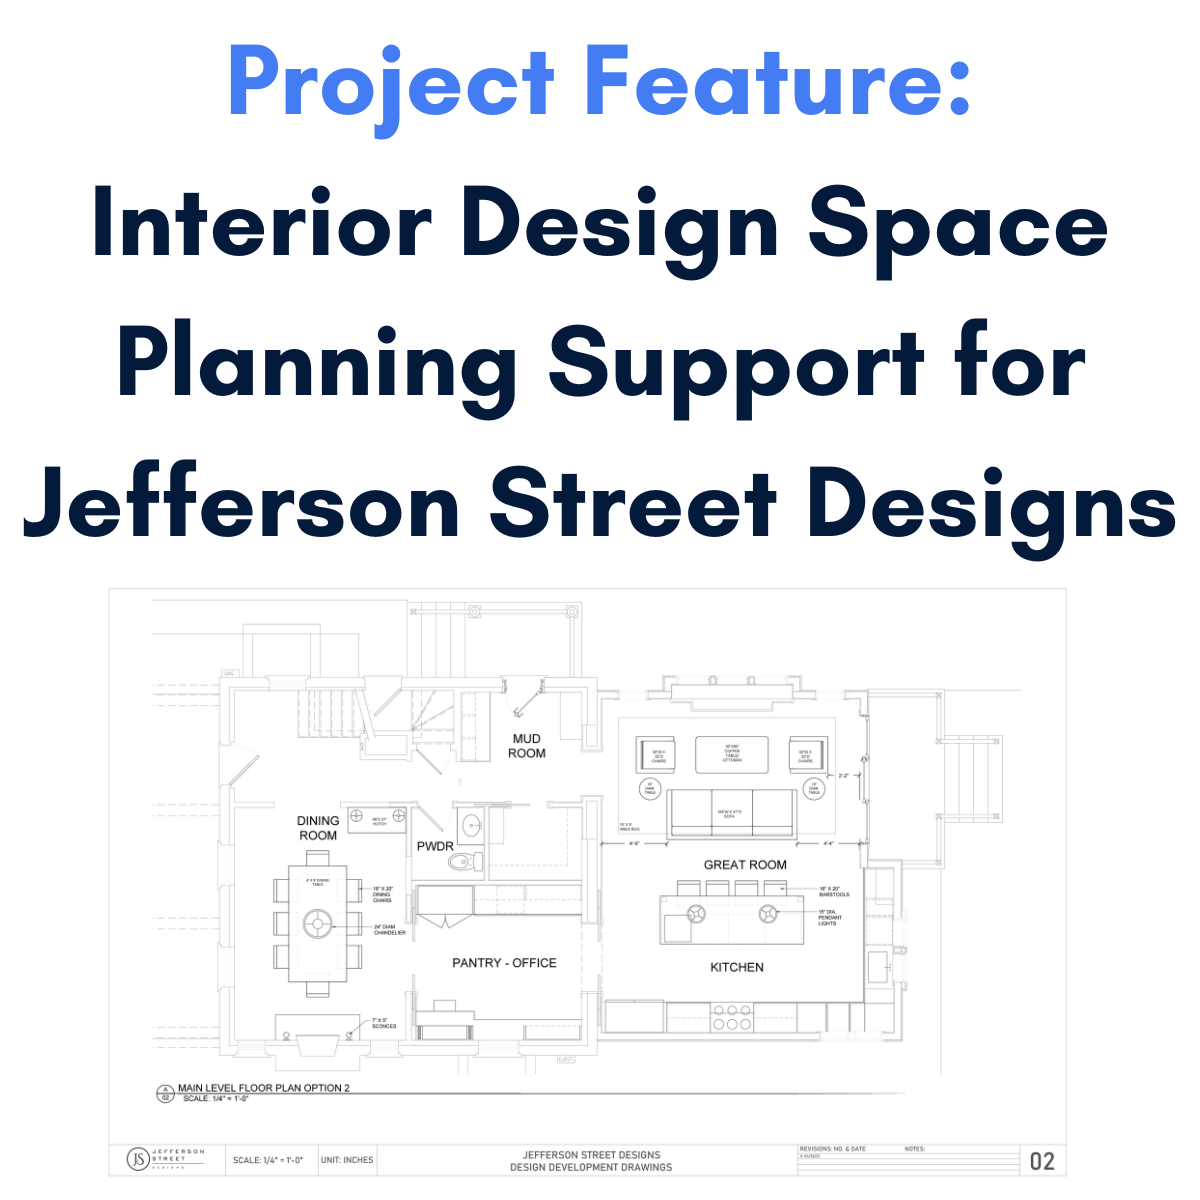 Interior design space planning support